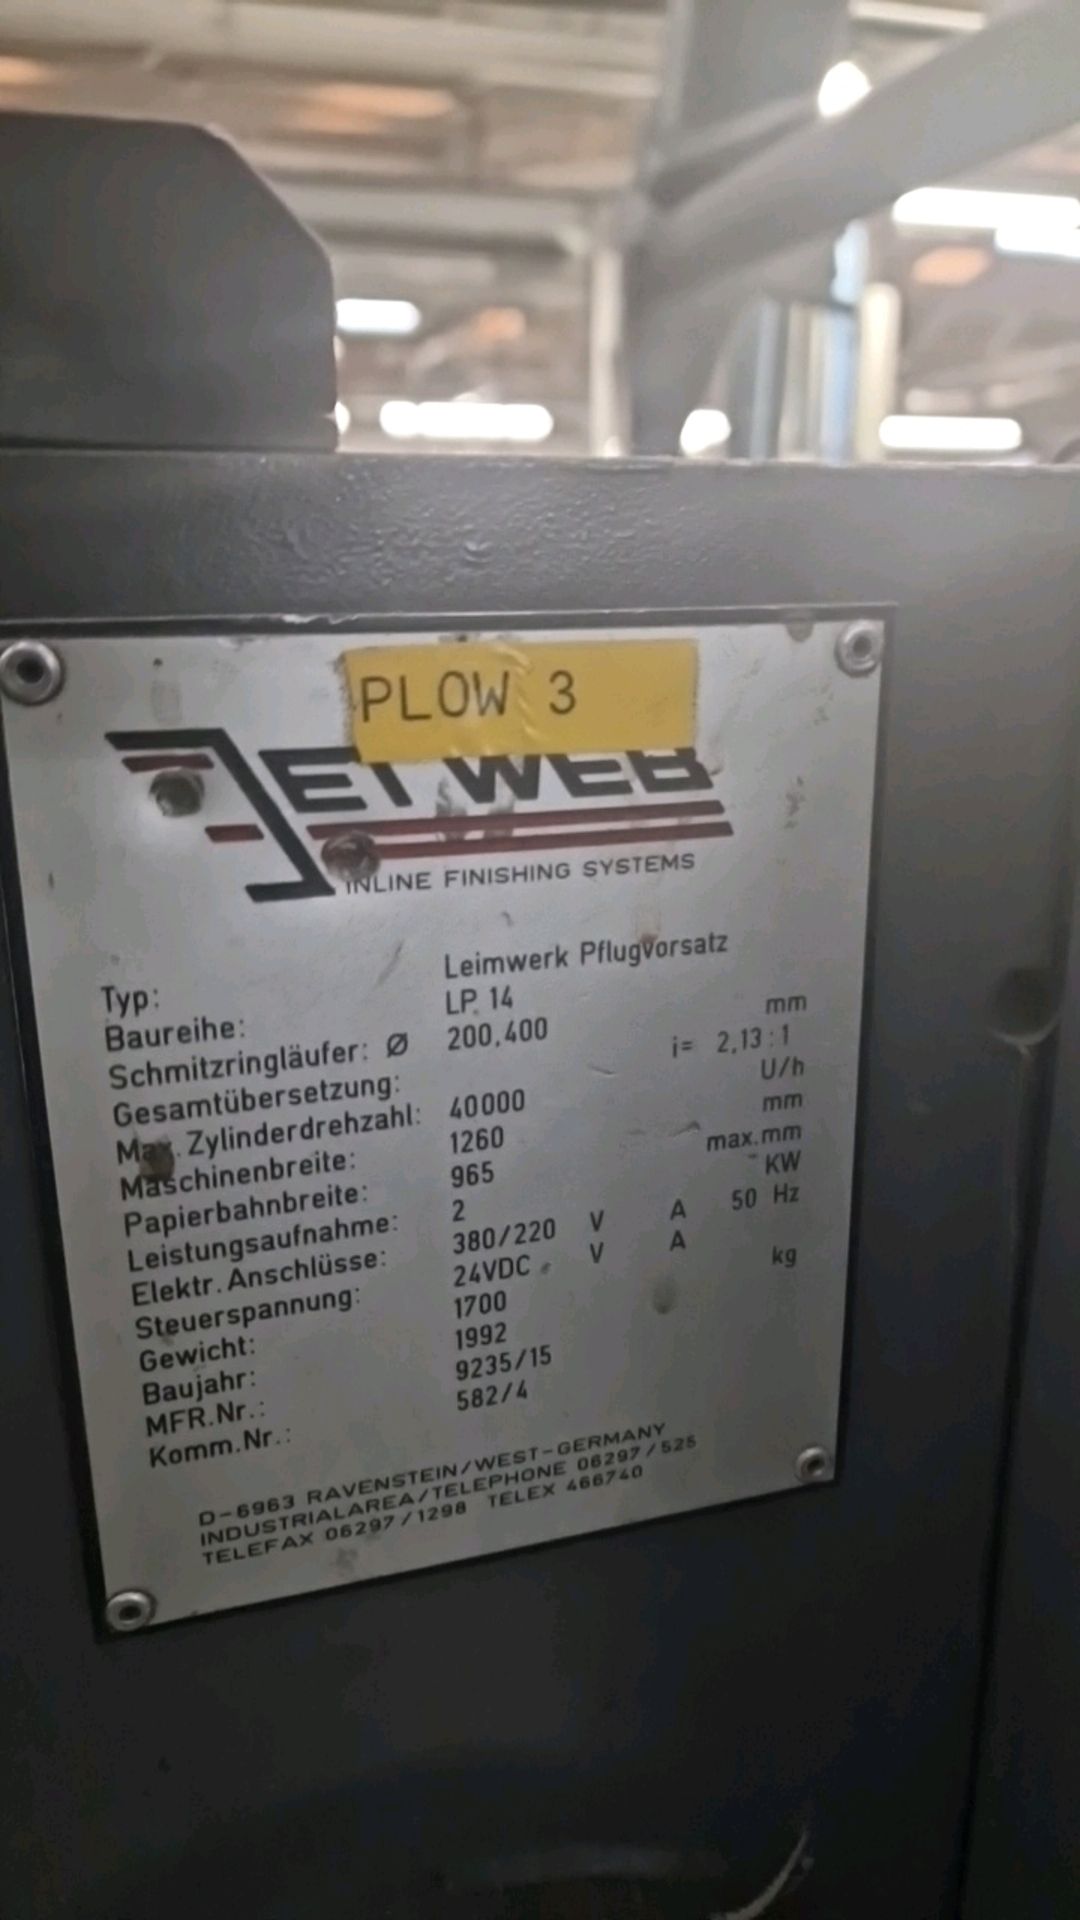 Jet Web Plow Machine - Image 3 of 7